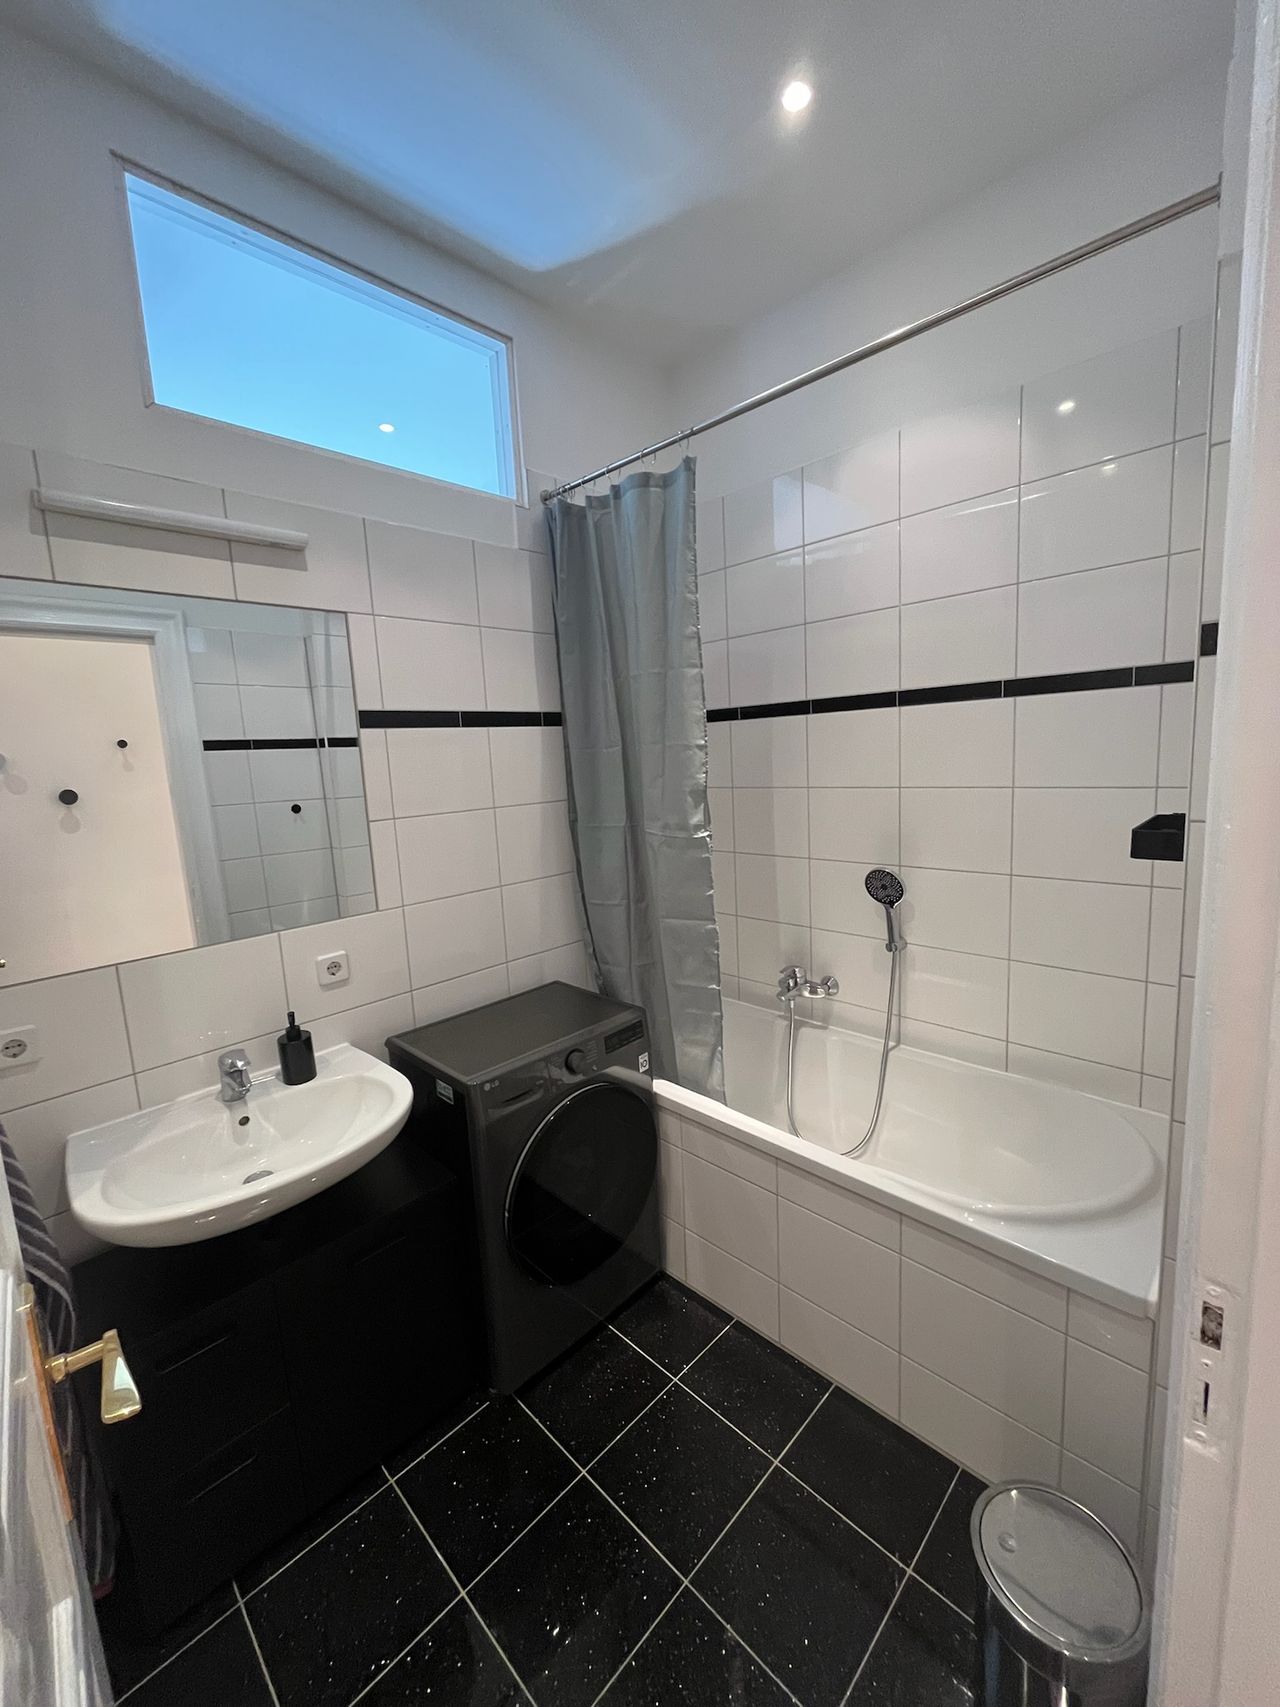 Freshly renovated, bright  1-room flat in Prenzlauer Berg